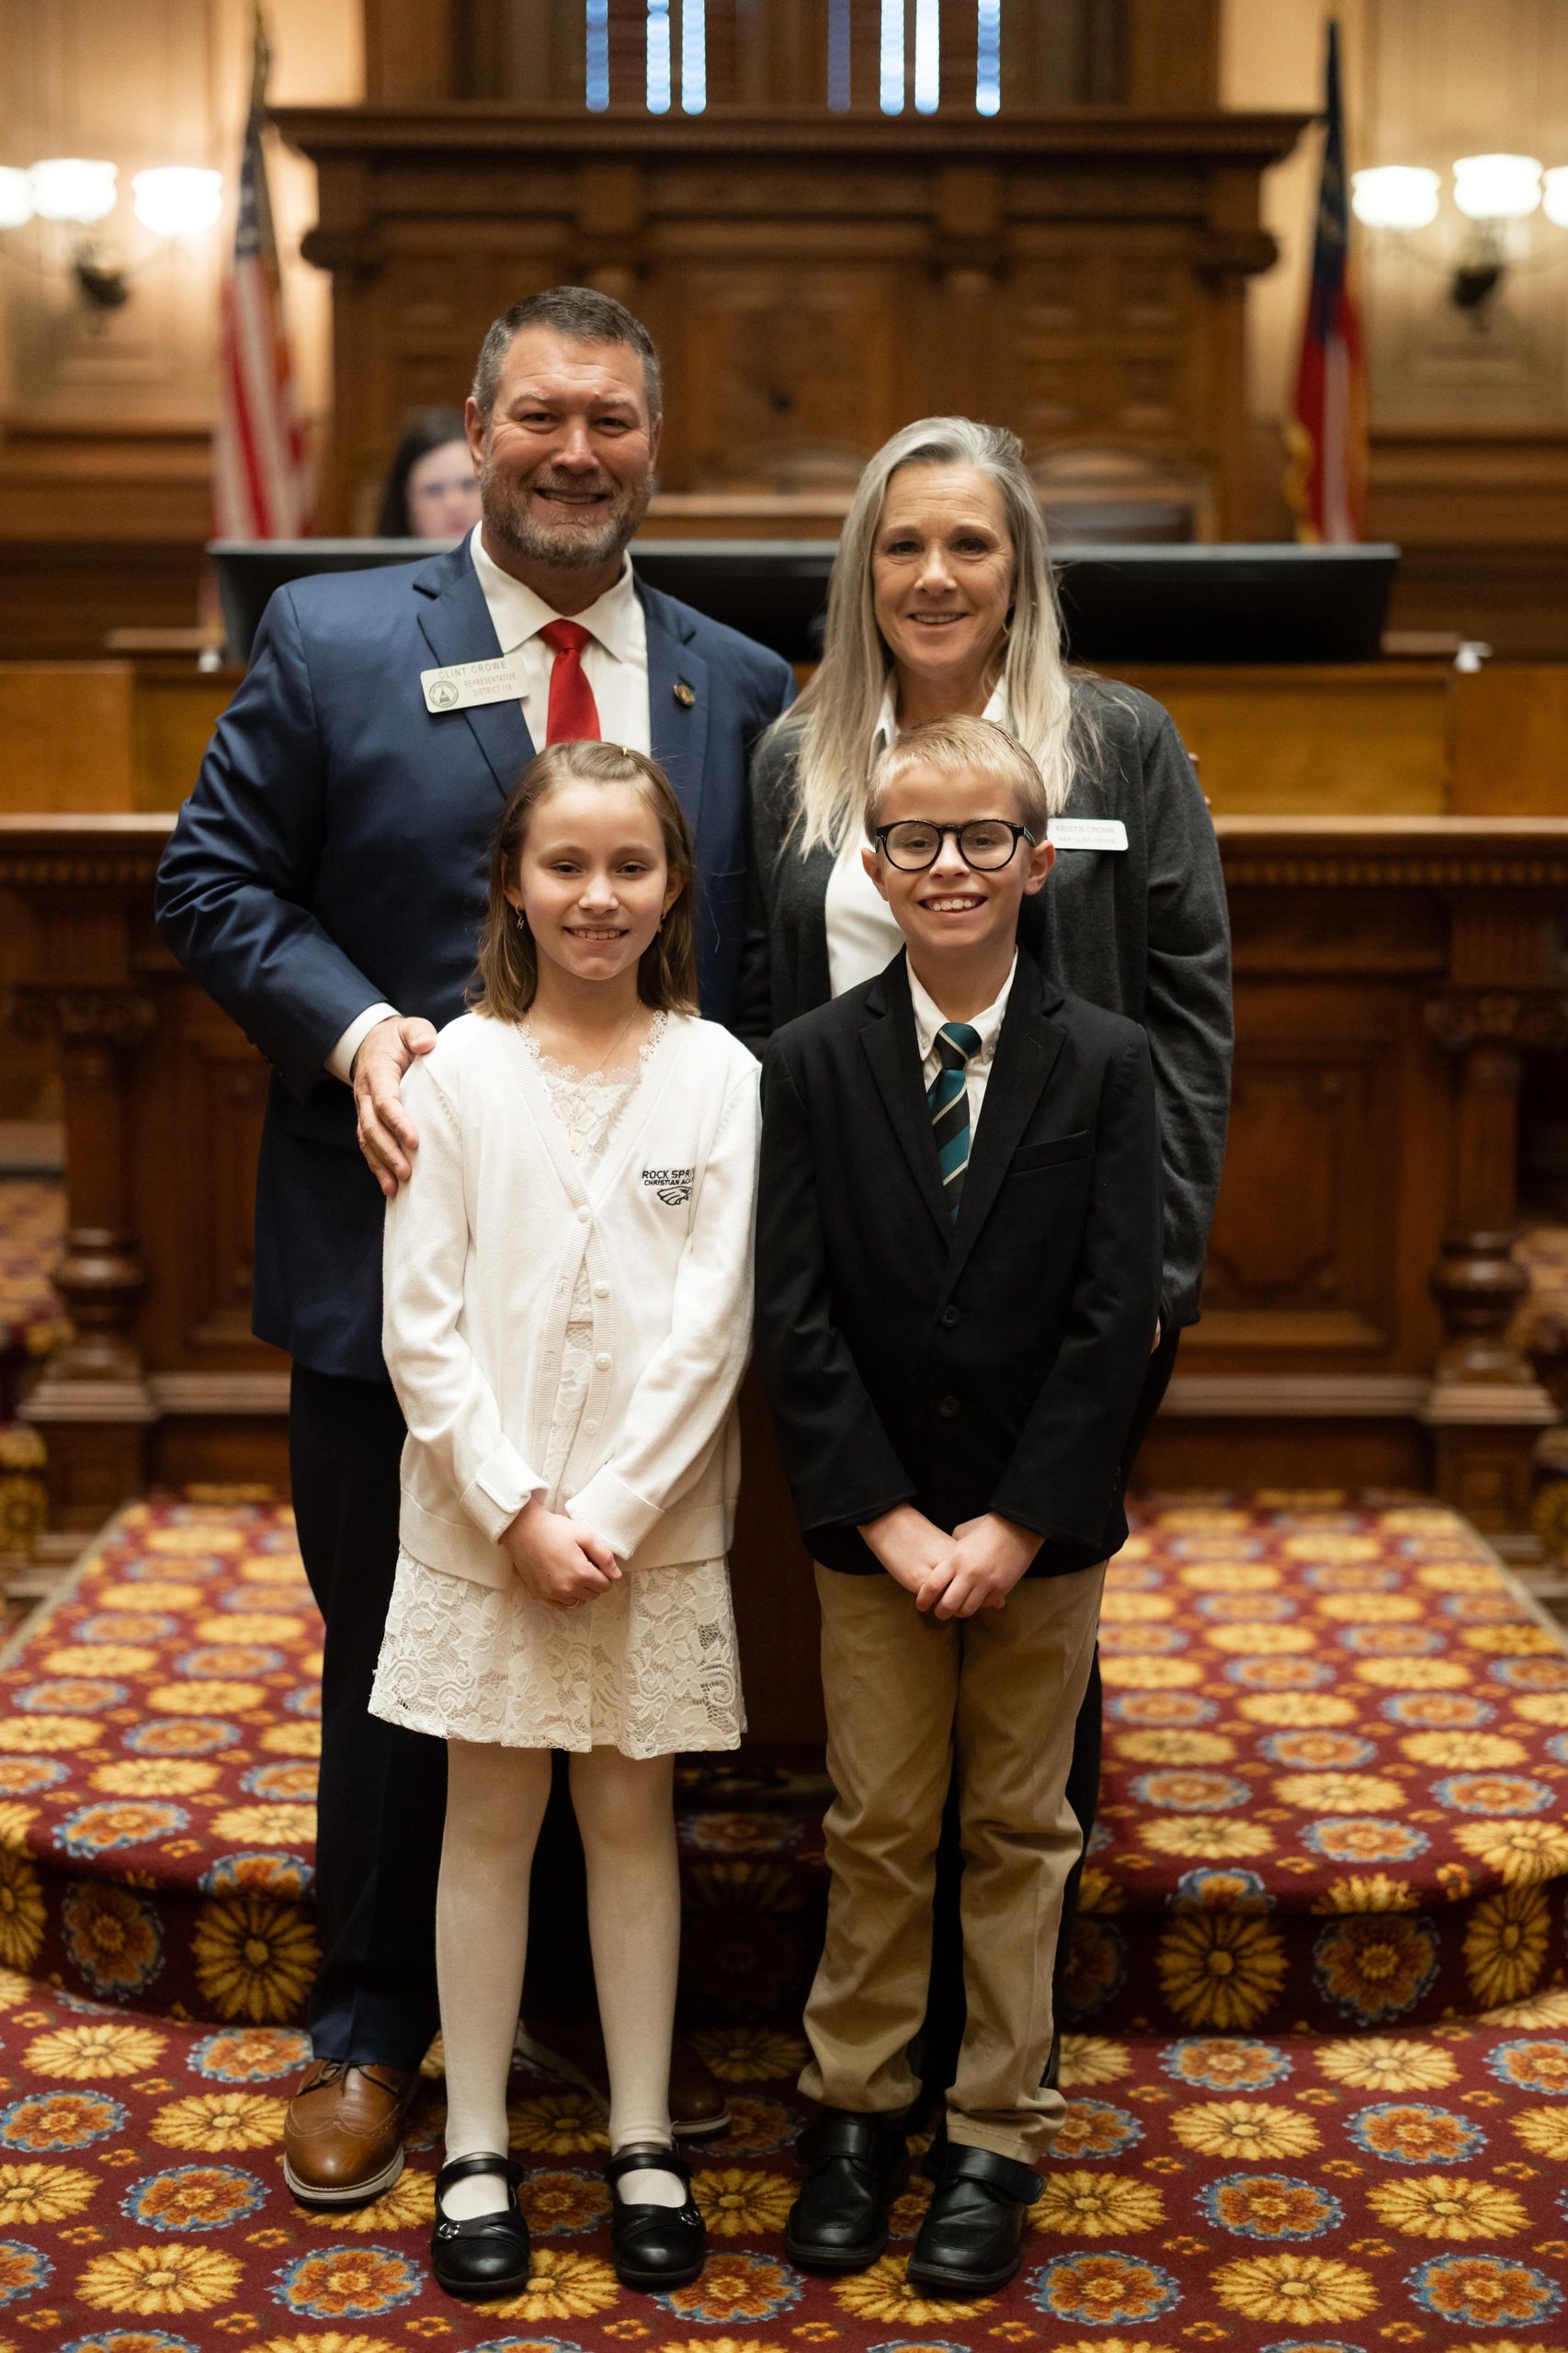 Jon Burns Nominated as Georgia's 74th Speaker of the House